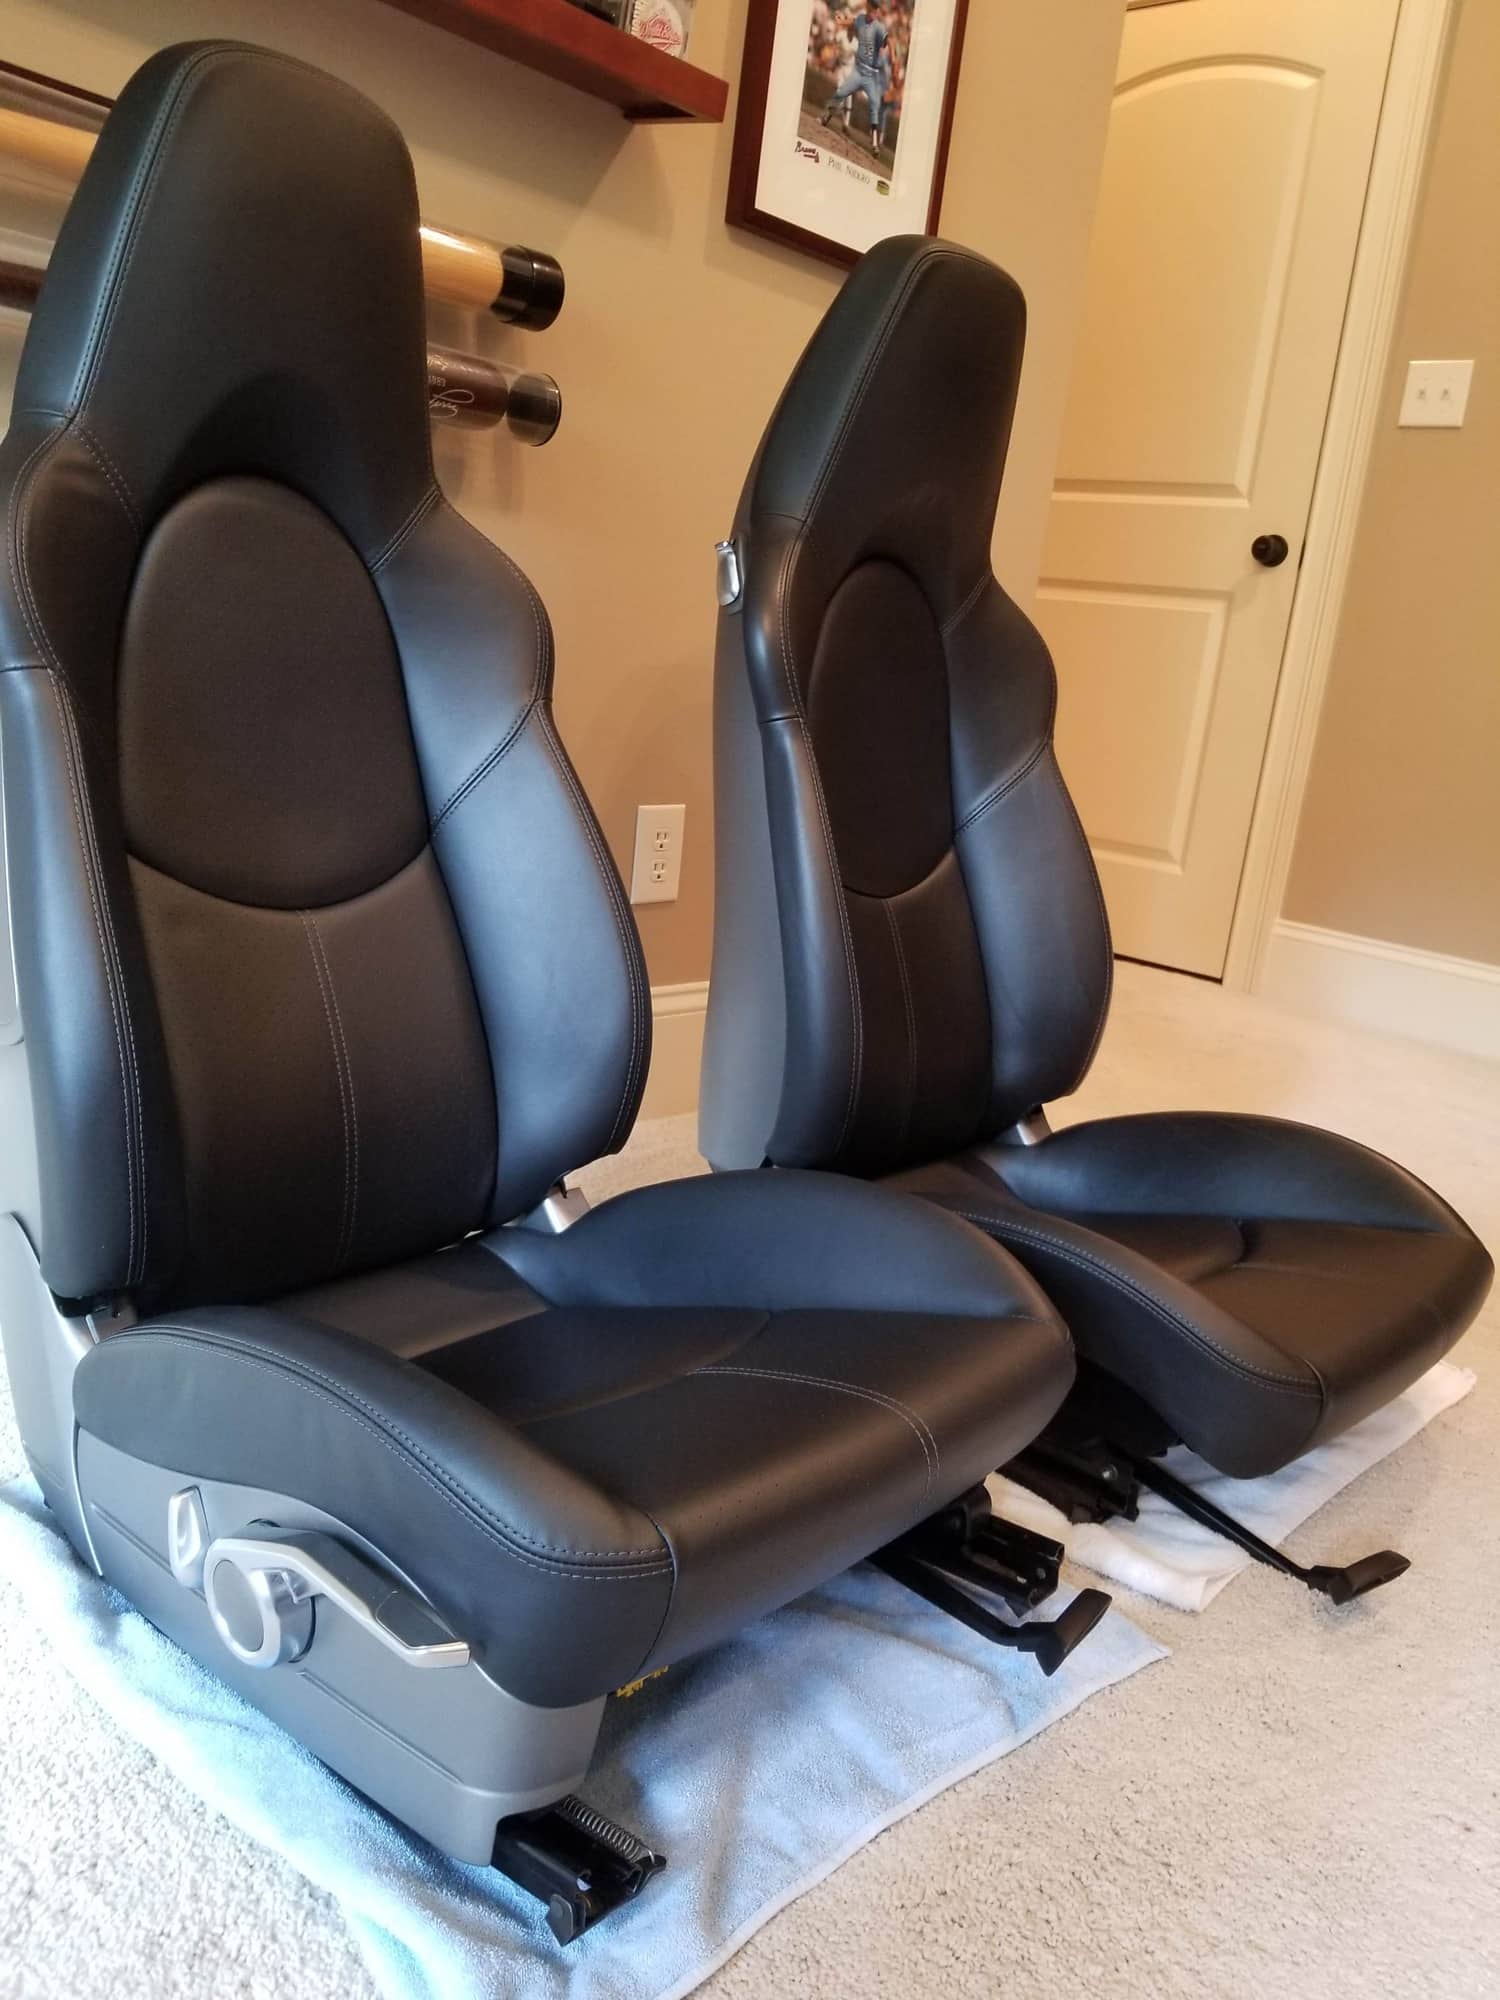 Interior/Upholstery - Cayman R Sport Seats - 987 & 997 - Used - Birmingham, AL 35242, United States